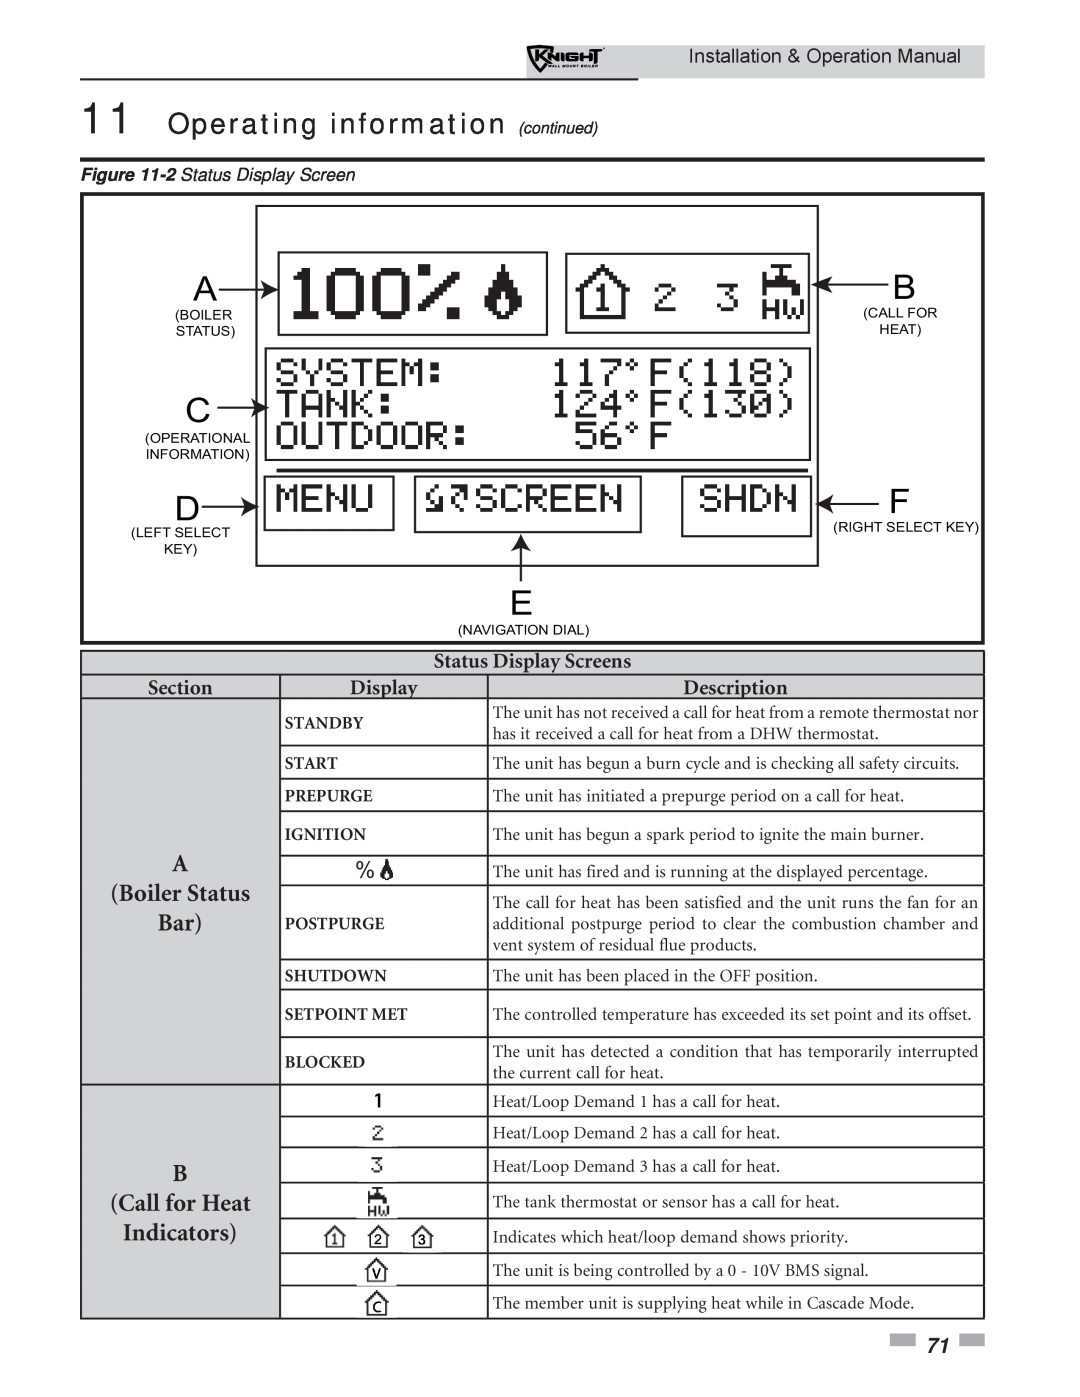 Lochinvar WH 55-399 operation manual Boiler Status, Call for Heat, Indicators, Status Display Screens, Section, Description 